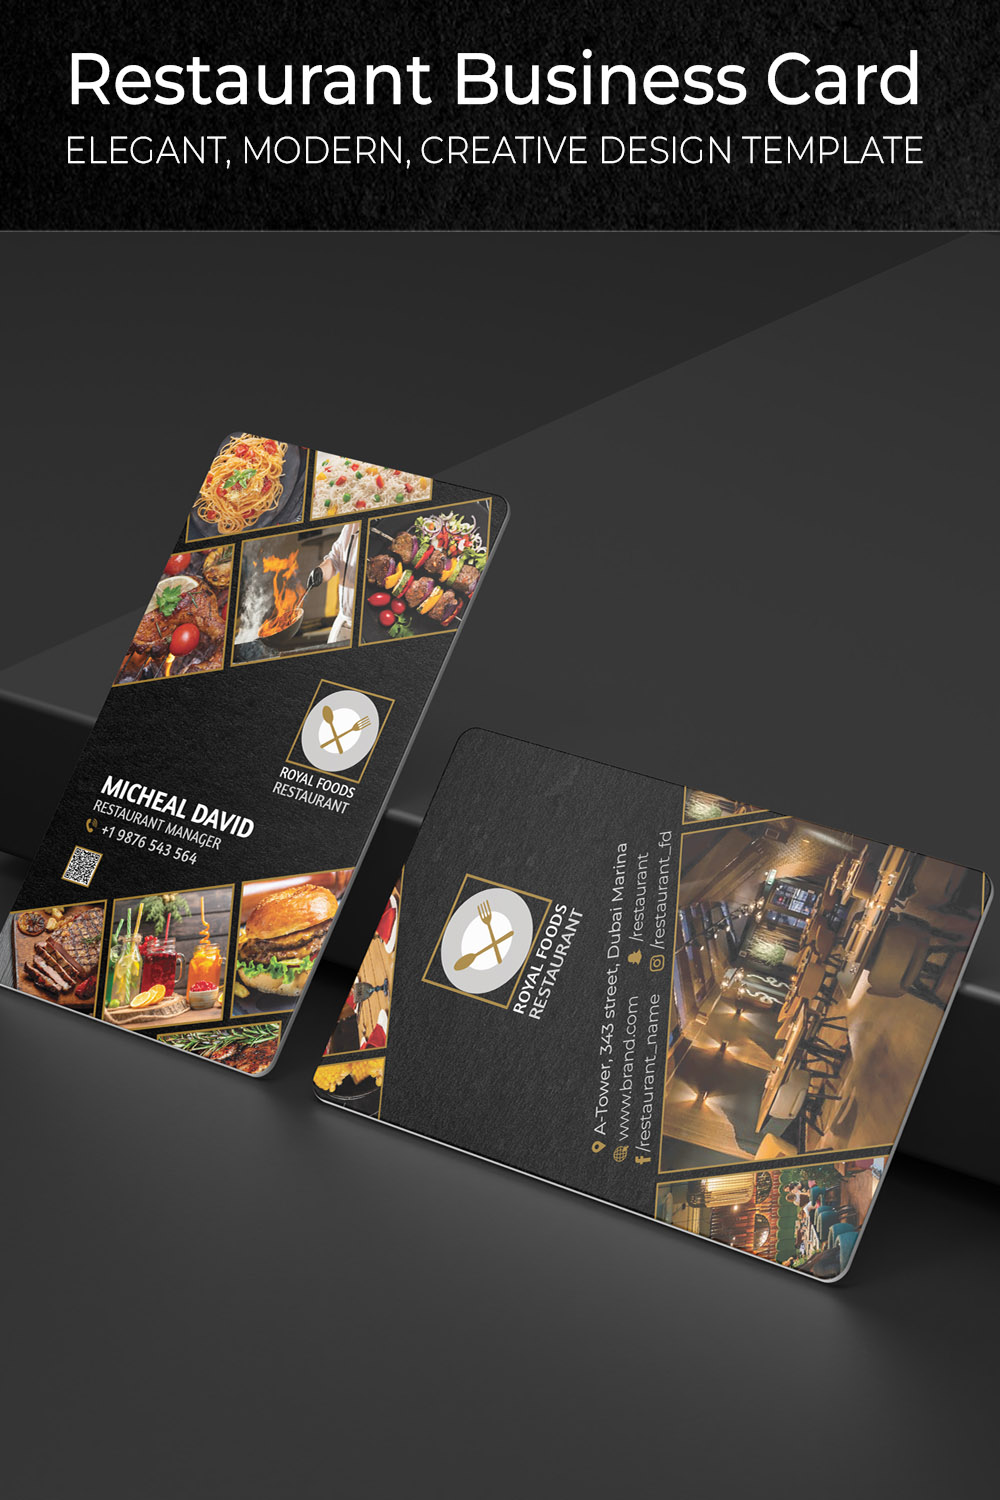 Restaurant Visiting Business Card Template pinterest image.